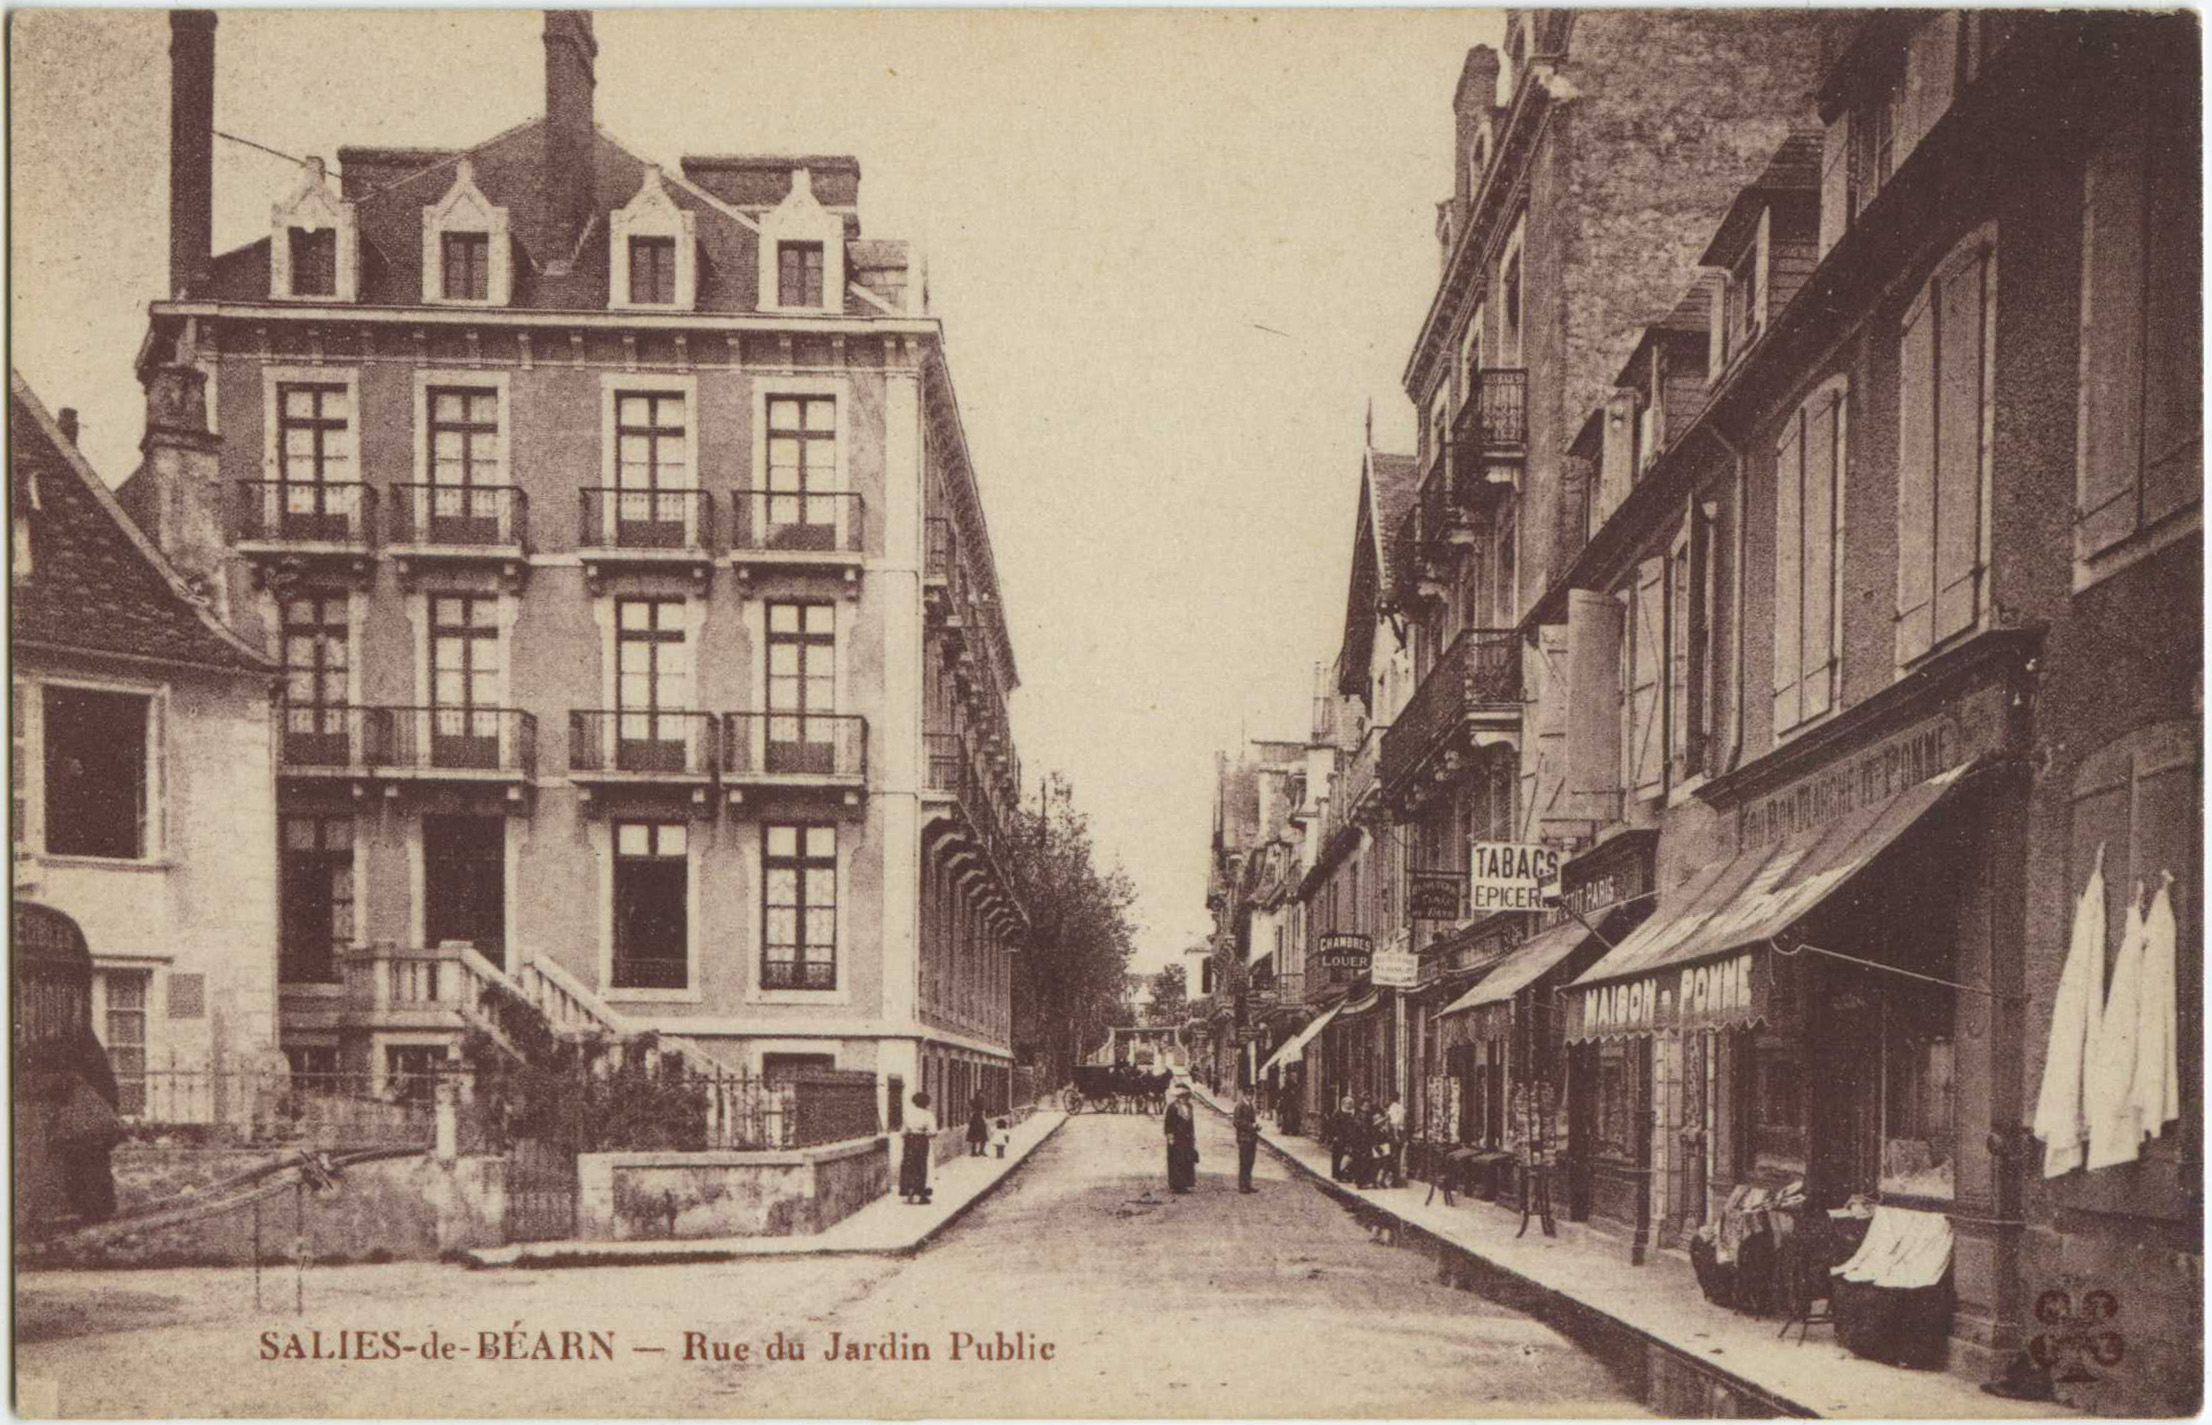 Salies-de-Béarn - Rue du Jardin Public